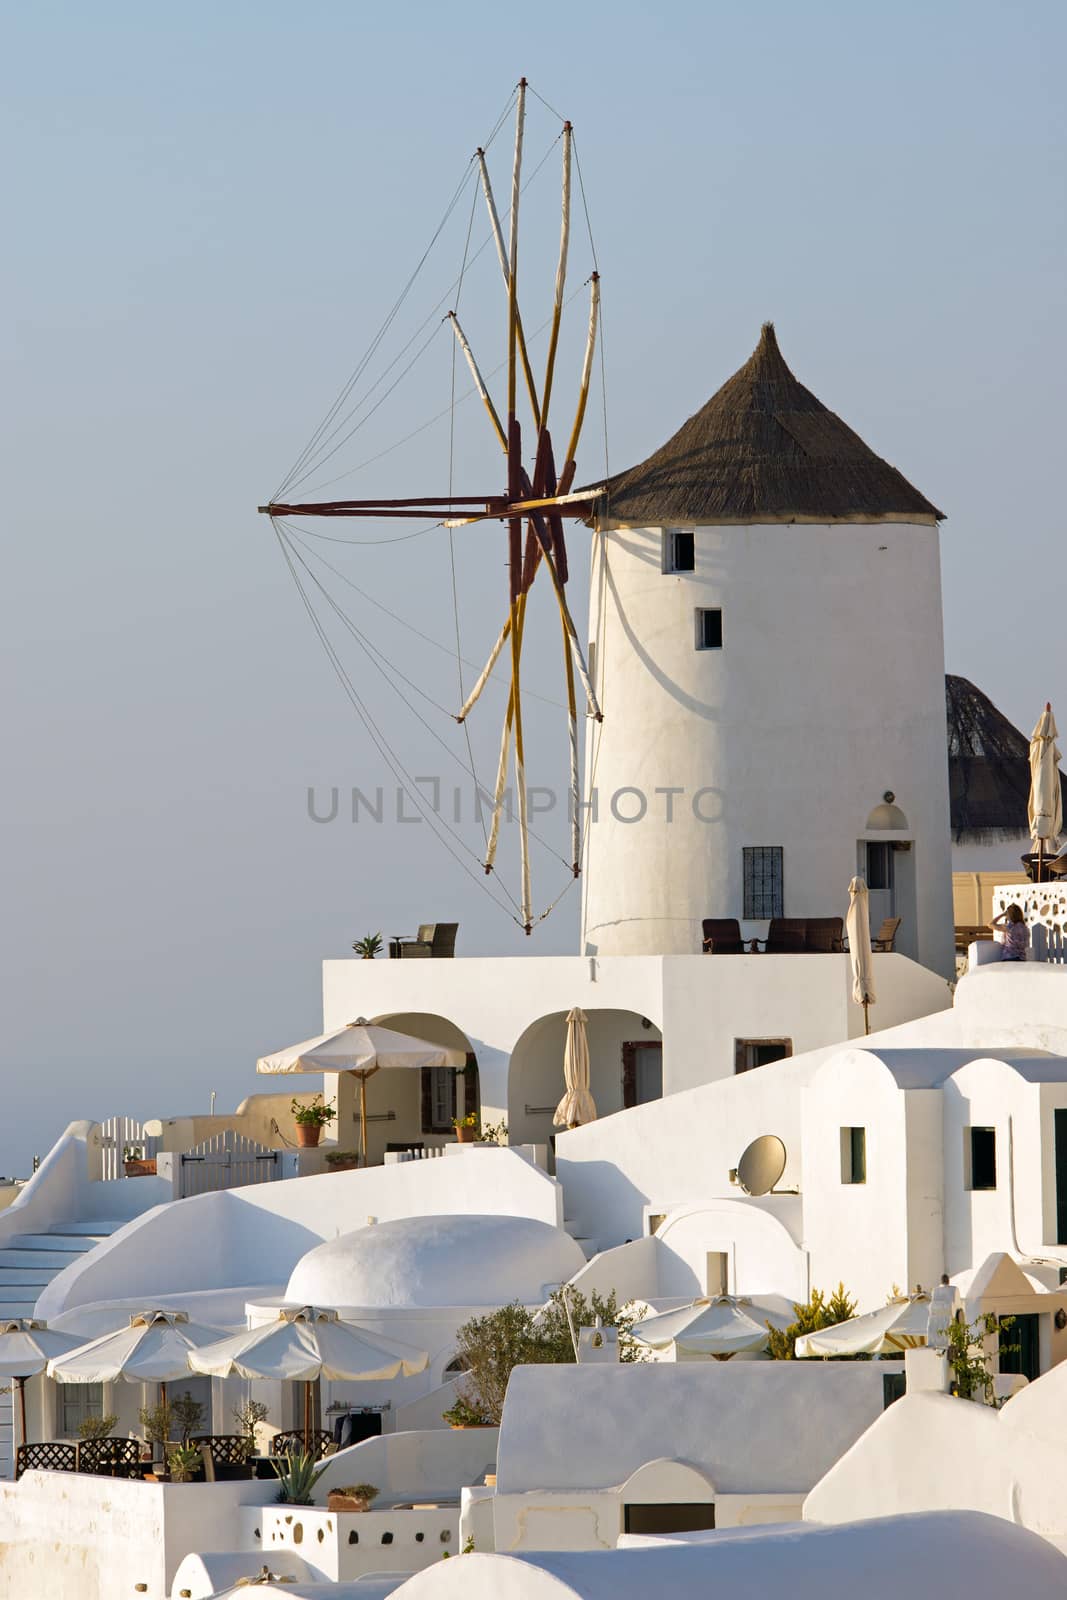 Oias famous windmill by elxeneize